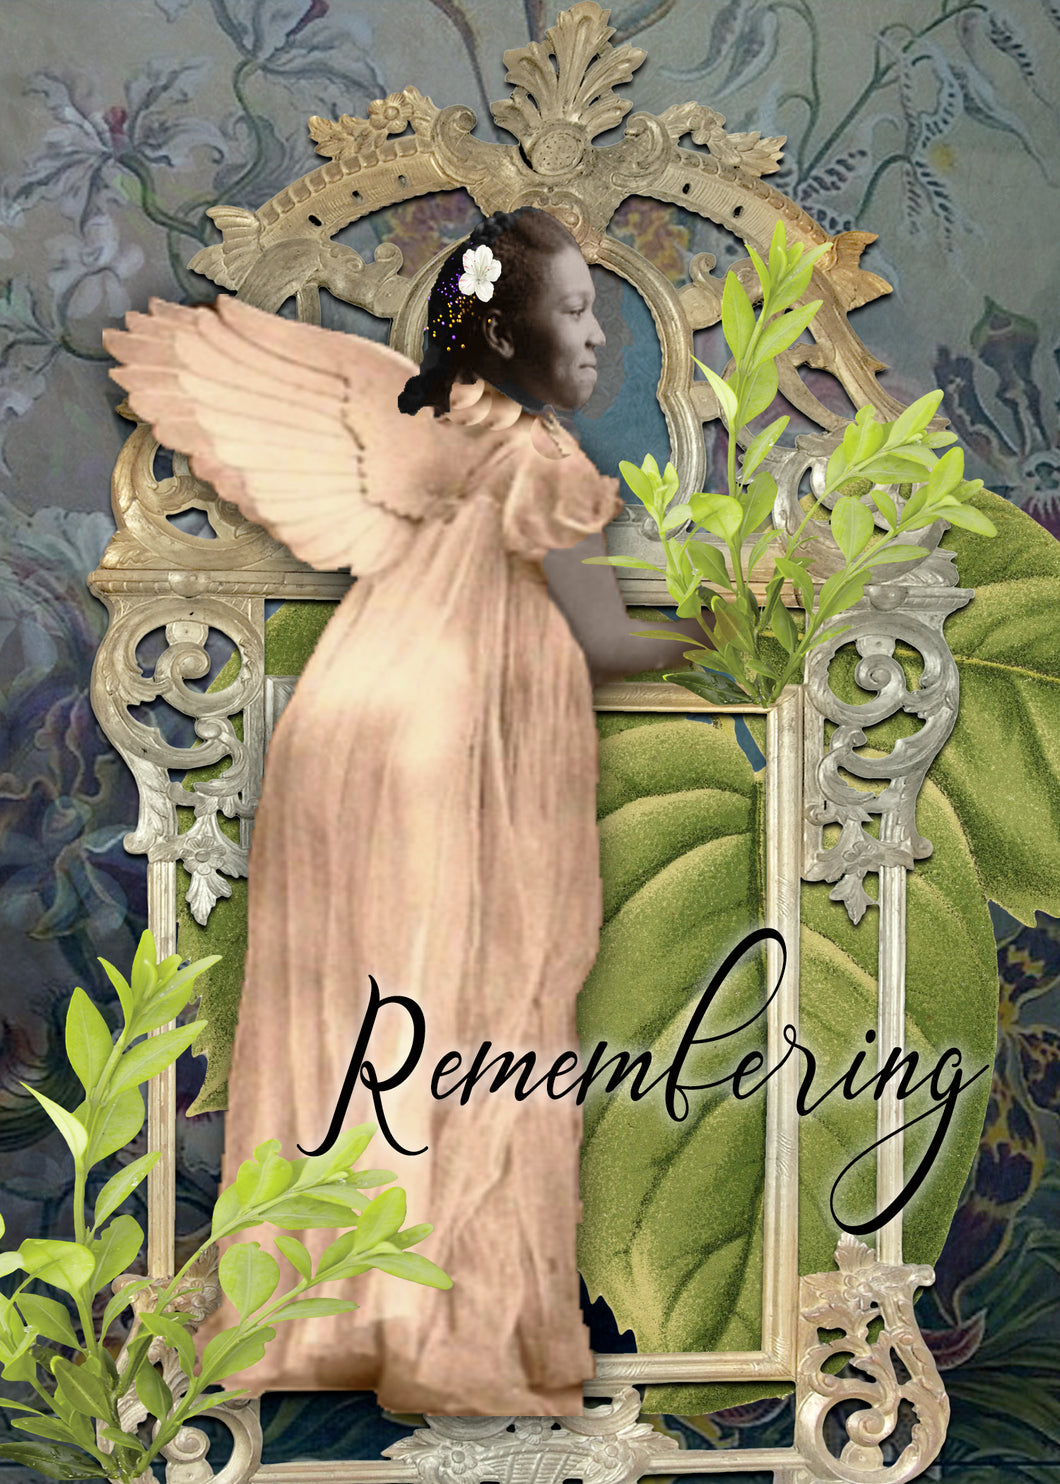 Remembering (Sympathy Card)